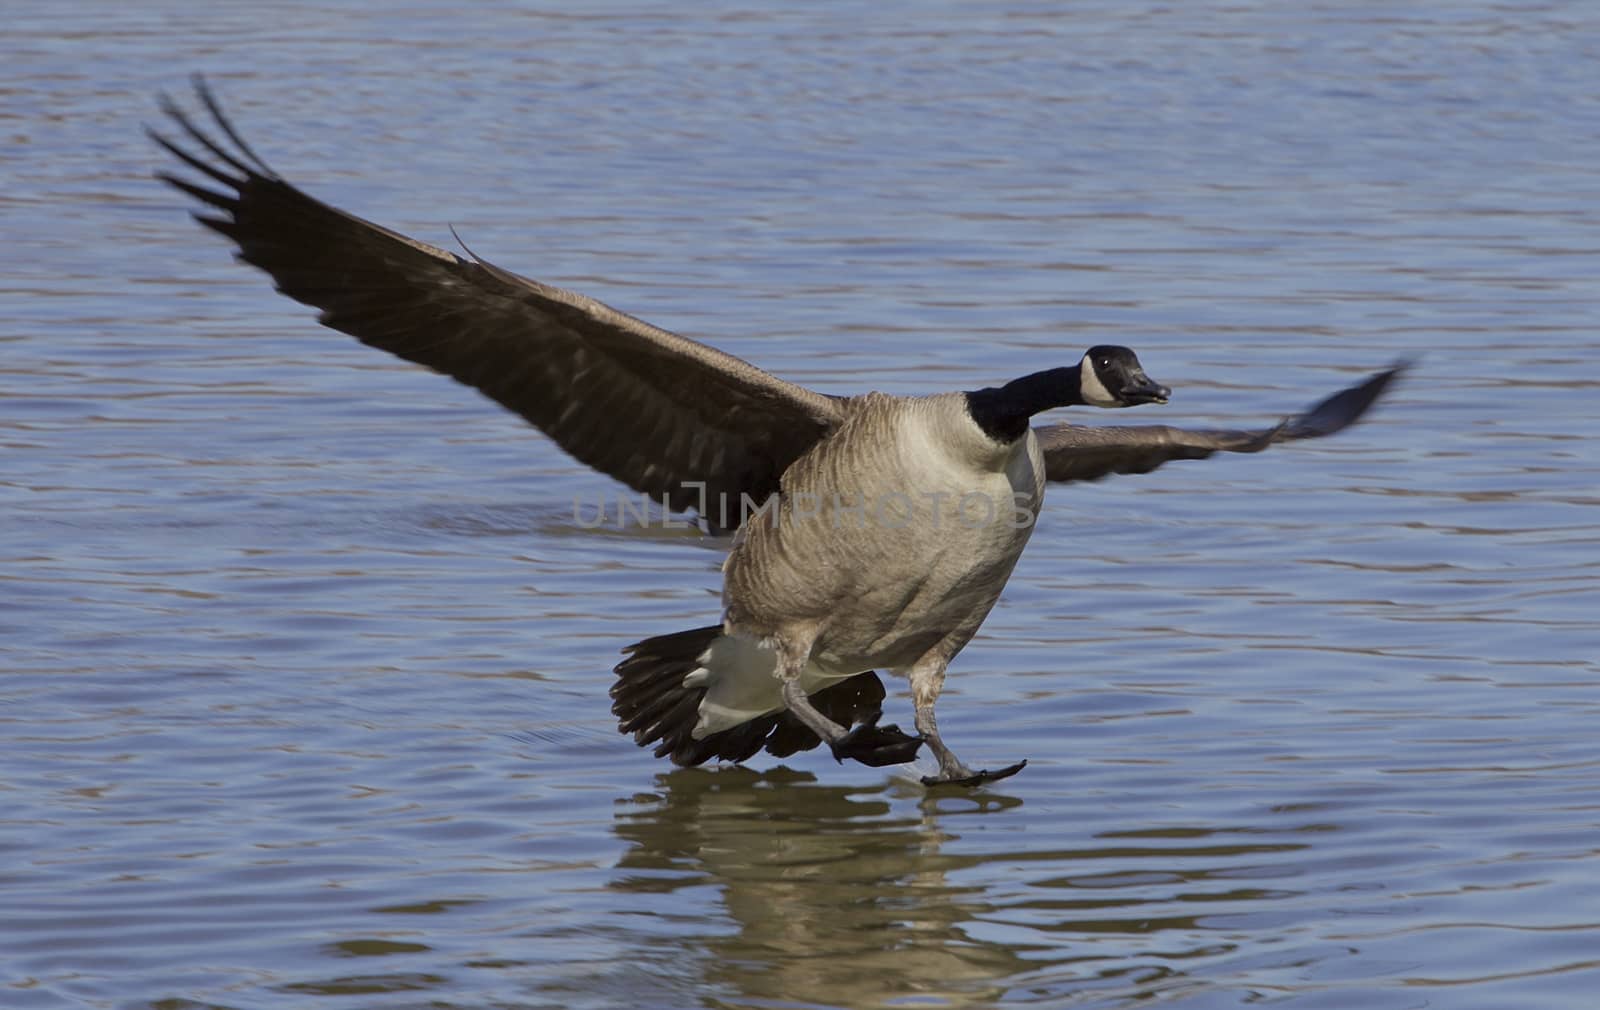 The landing cackling goose